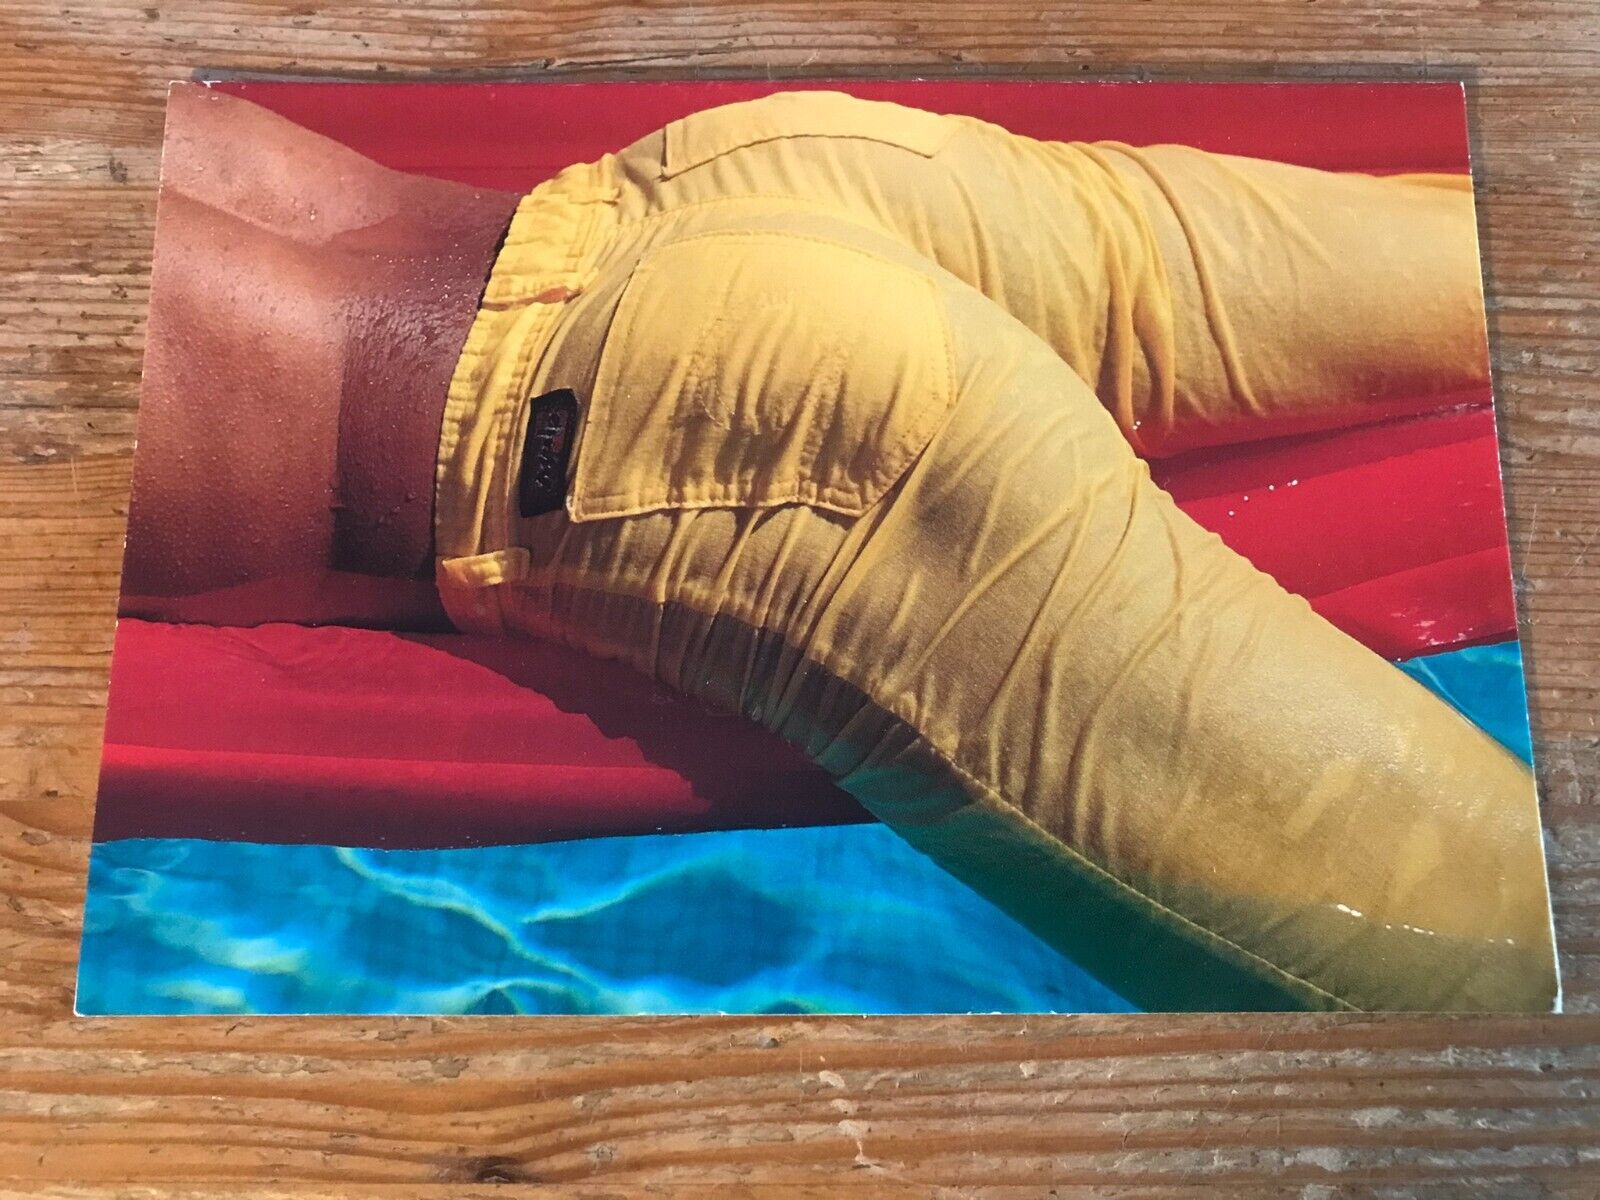 Beefcake Greeting Card Playgirl Tight Pants 1983 Hot Guy Man Gay Interest